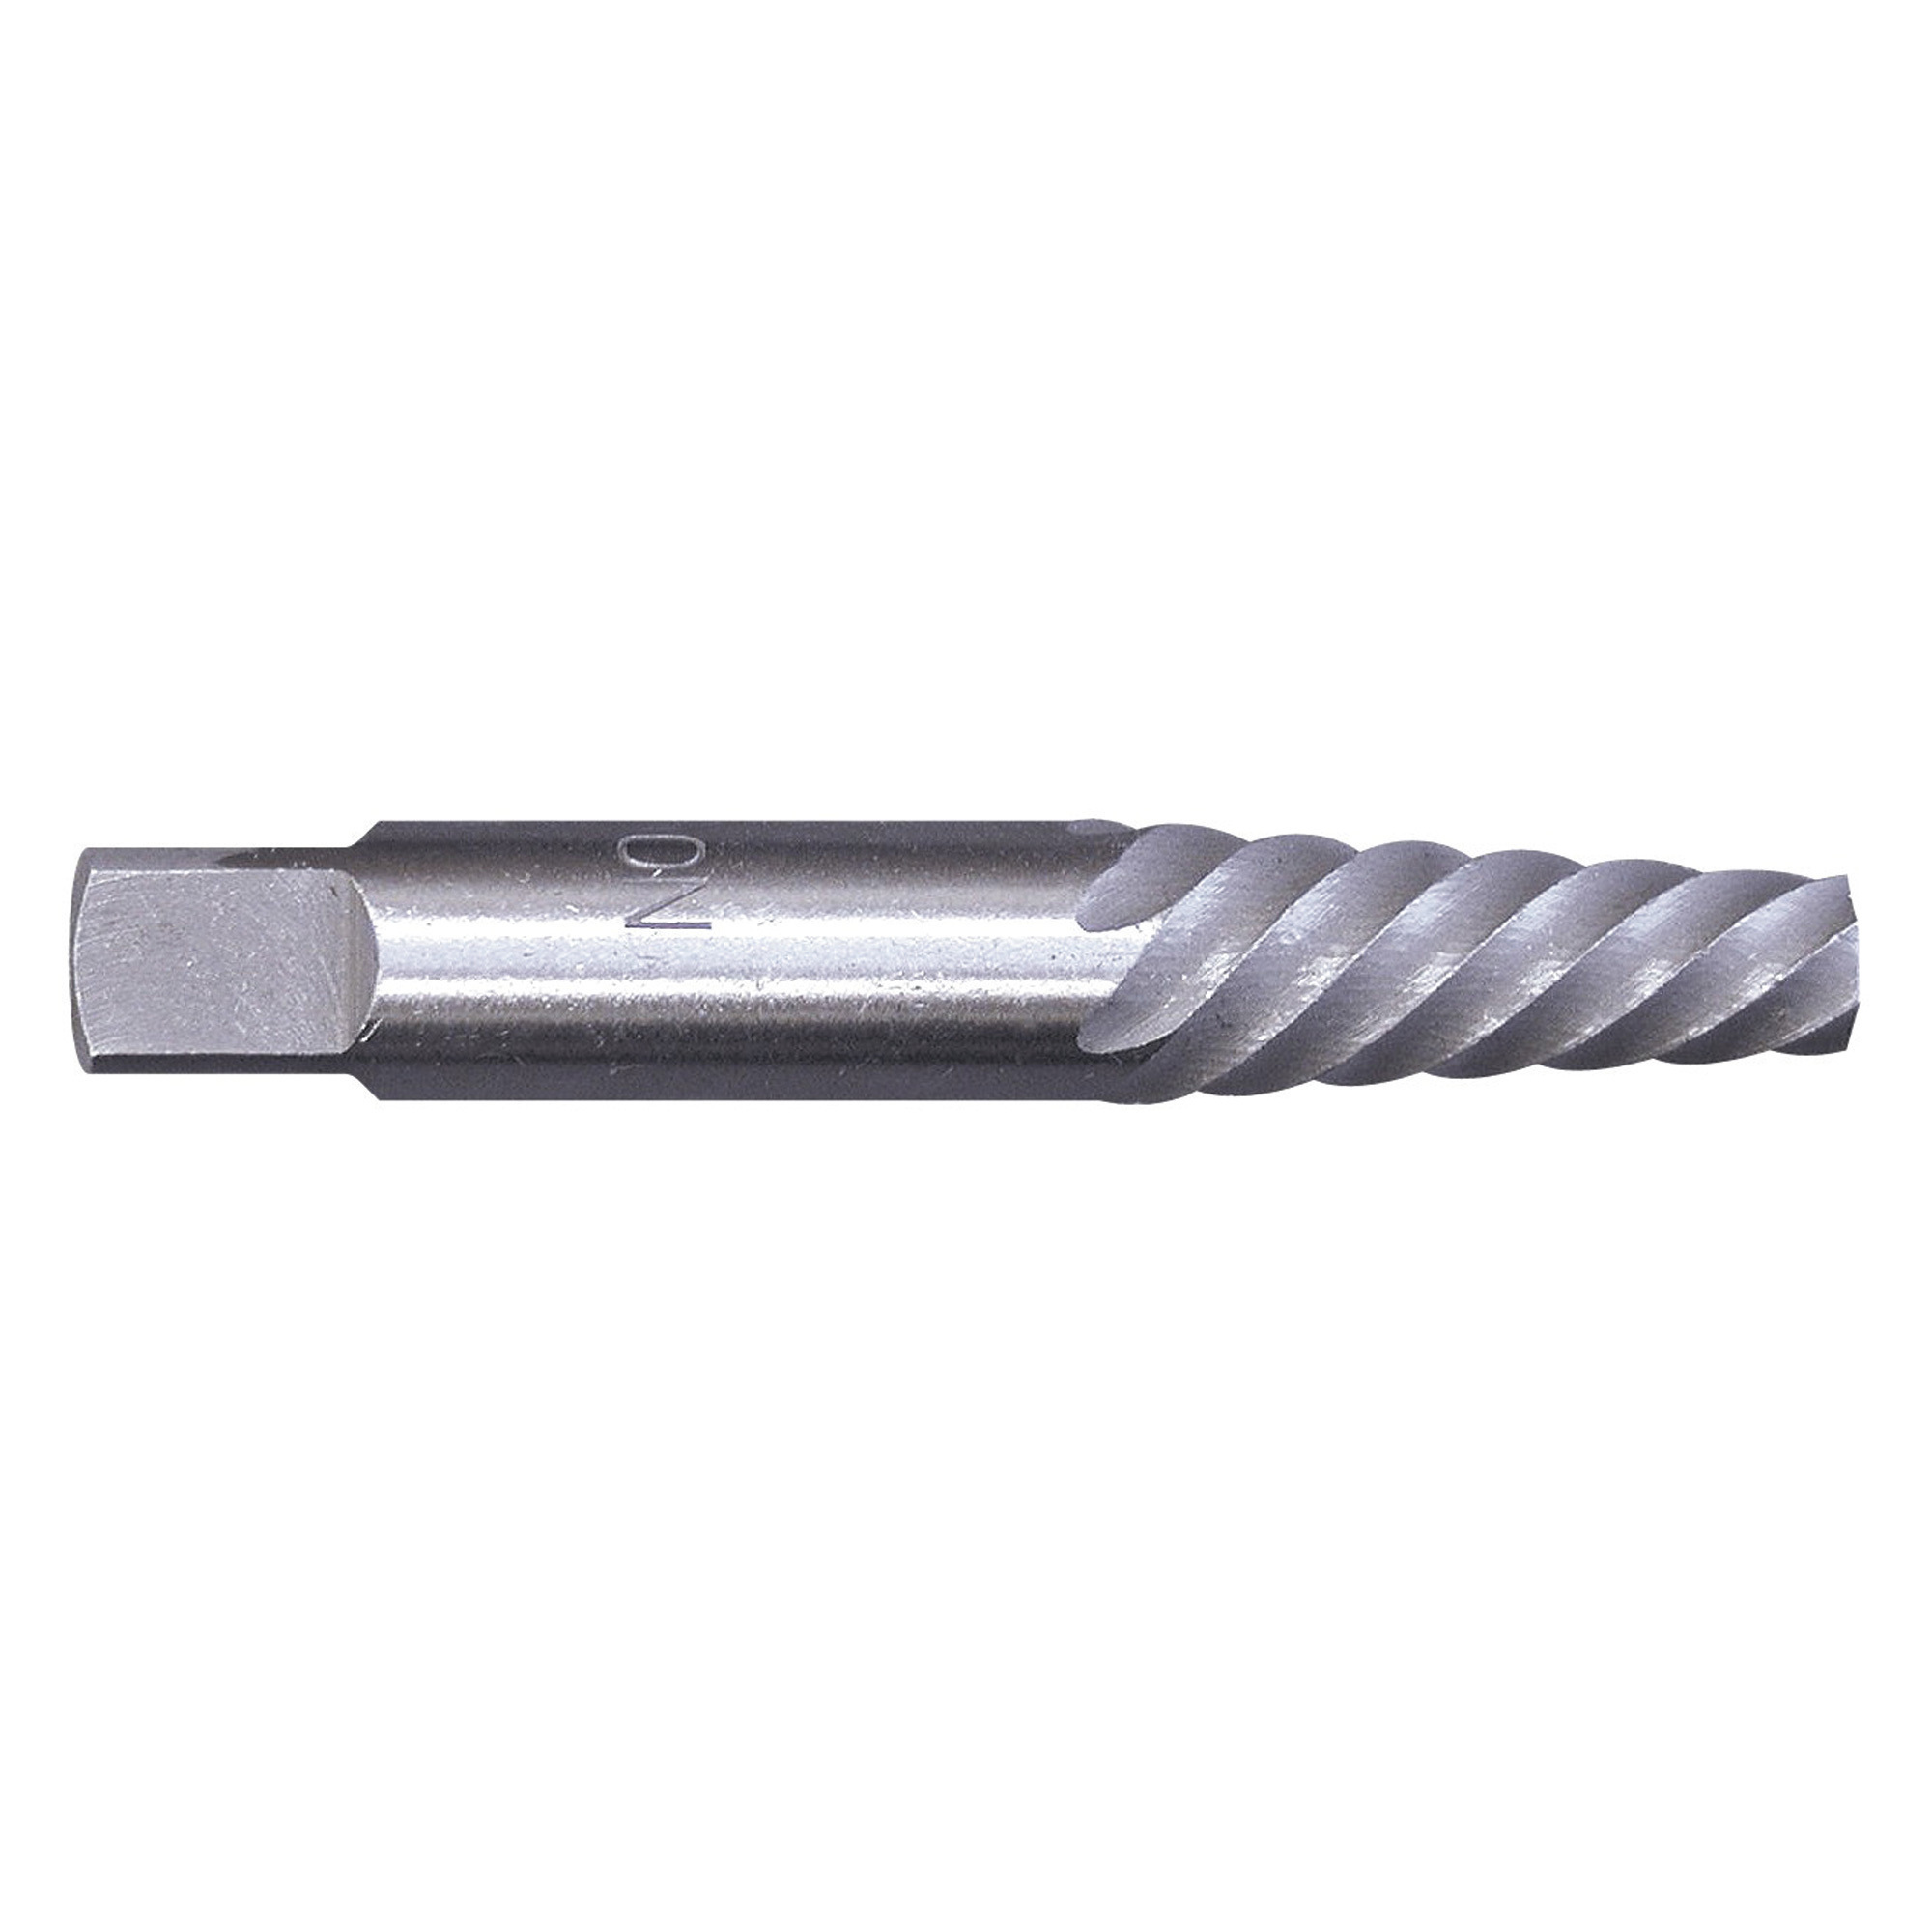 Century Tool Spiral Flute Screw Extractor, #6, Model 73406